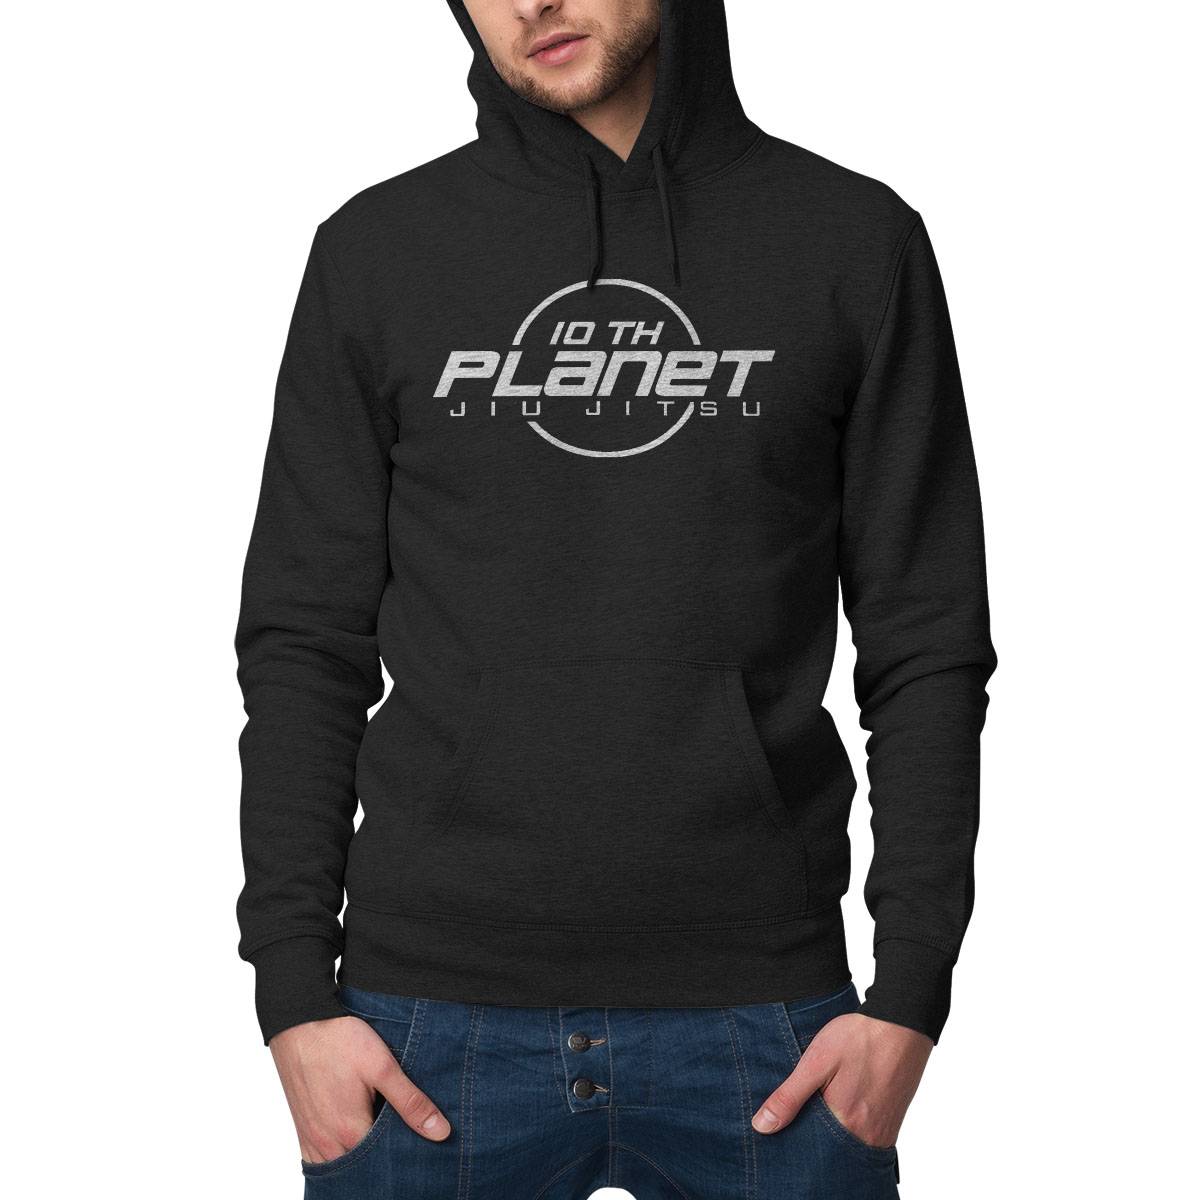 10Th Planet Jiu-Jitsu Logo